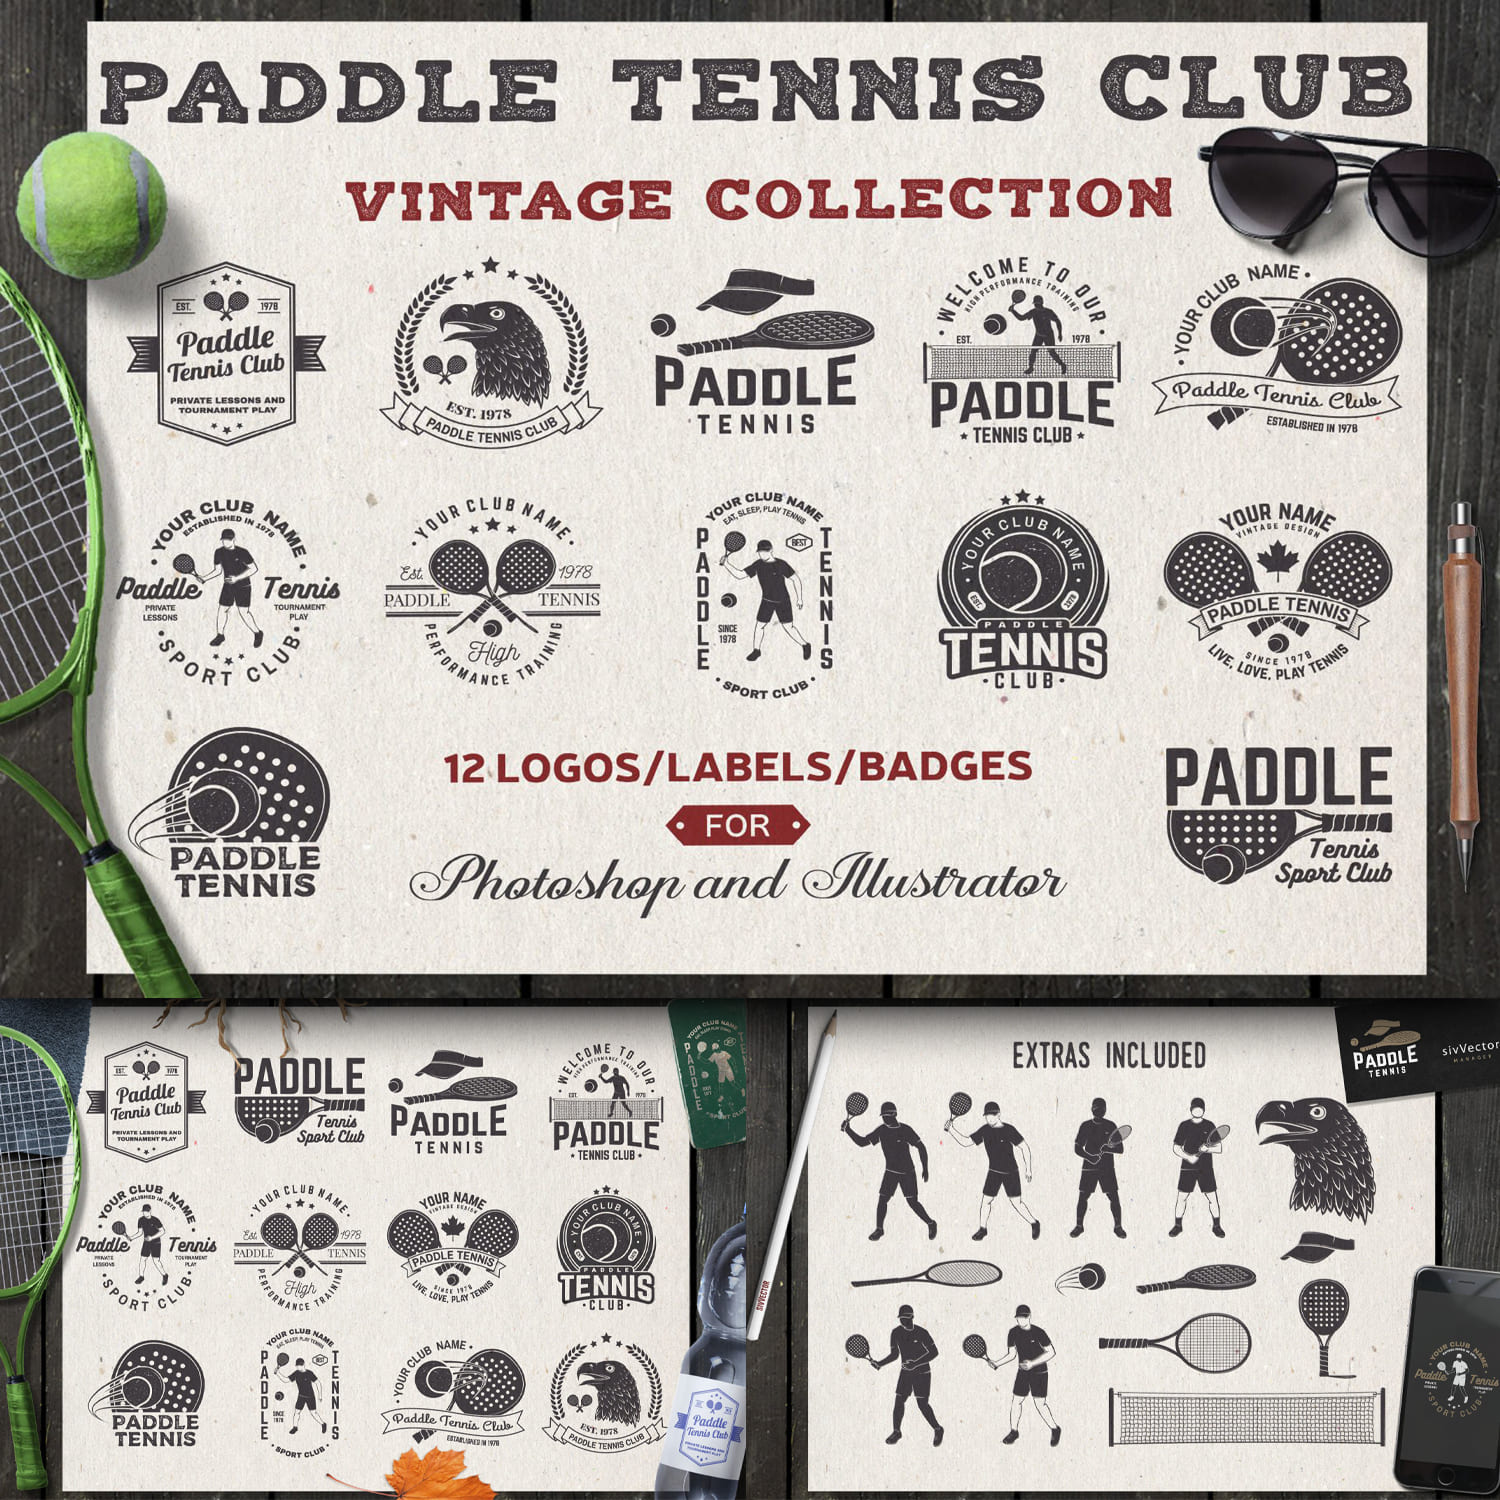 Paddle Tennis Club Logos/Badges cover.